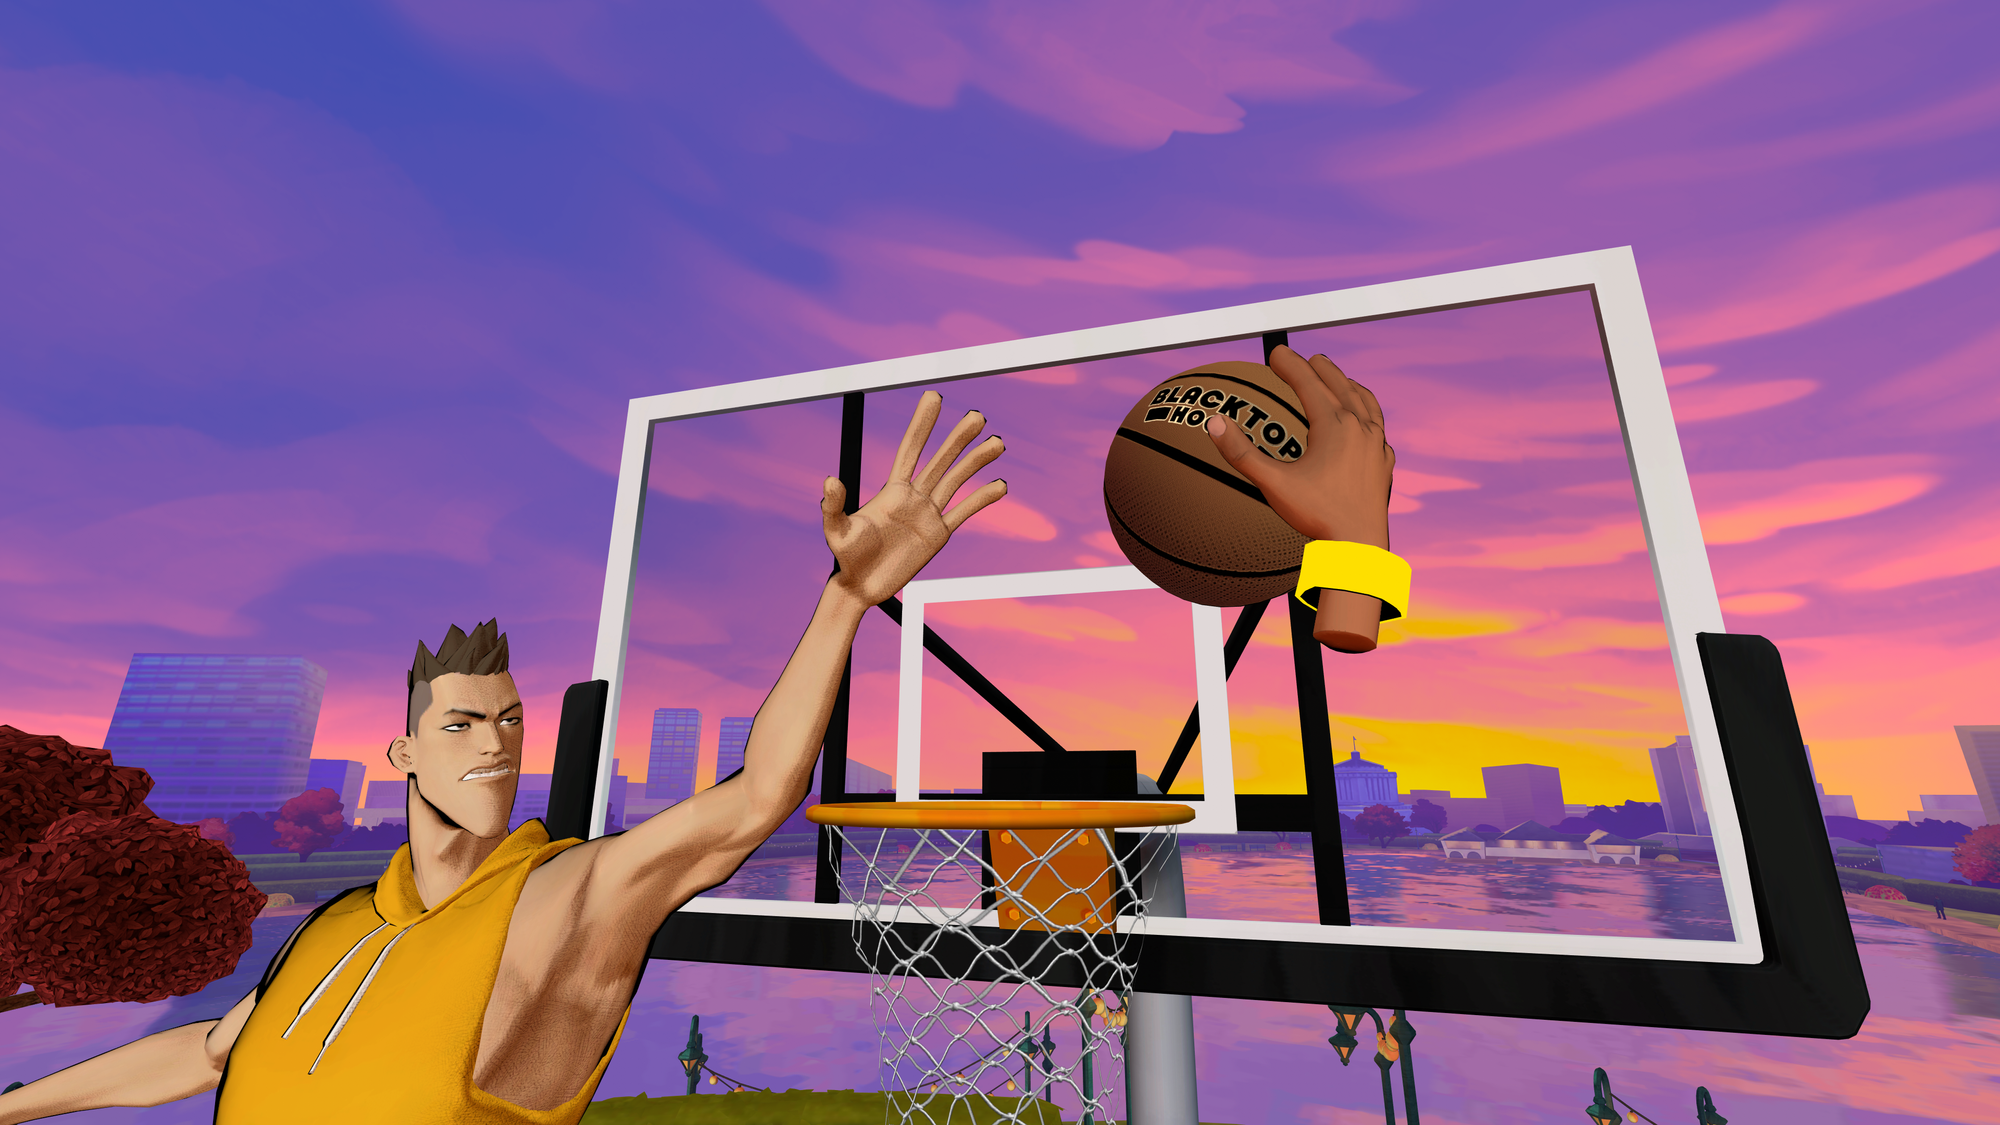 Blacktop Hoops screenshot, floating hand dunking a basketball as someone blocks you